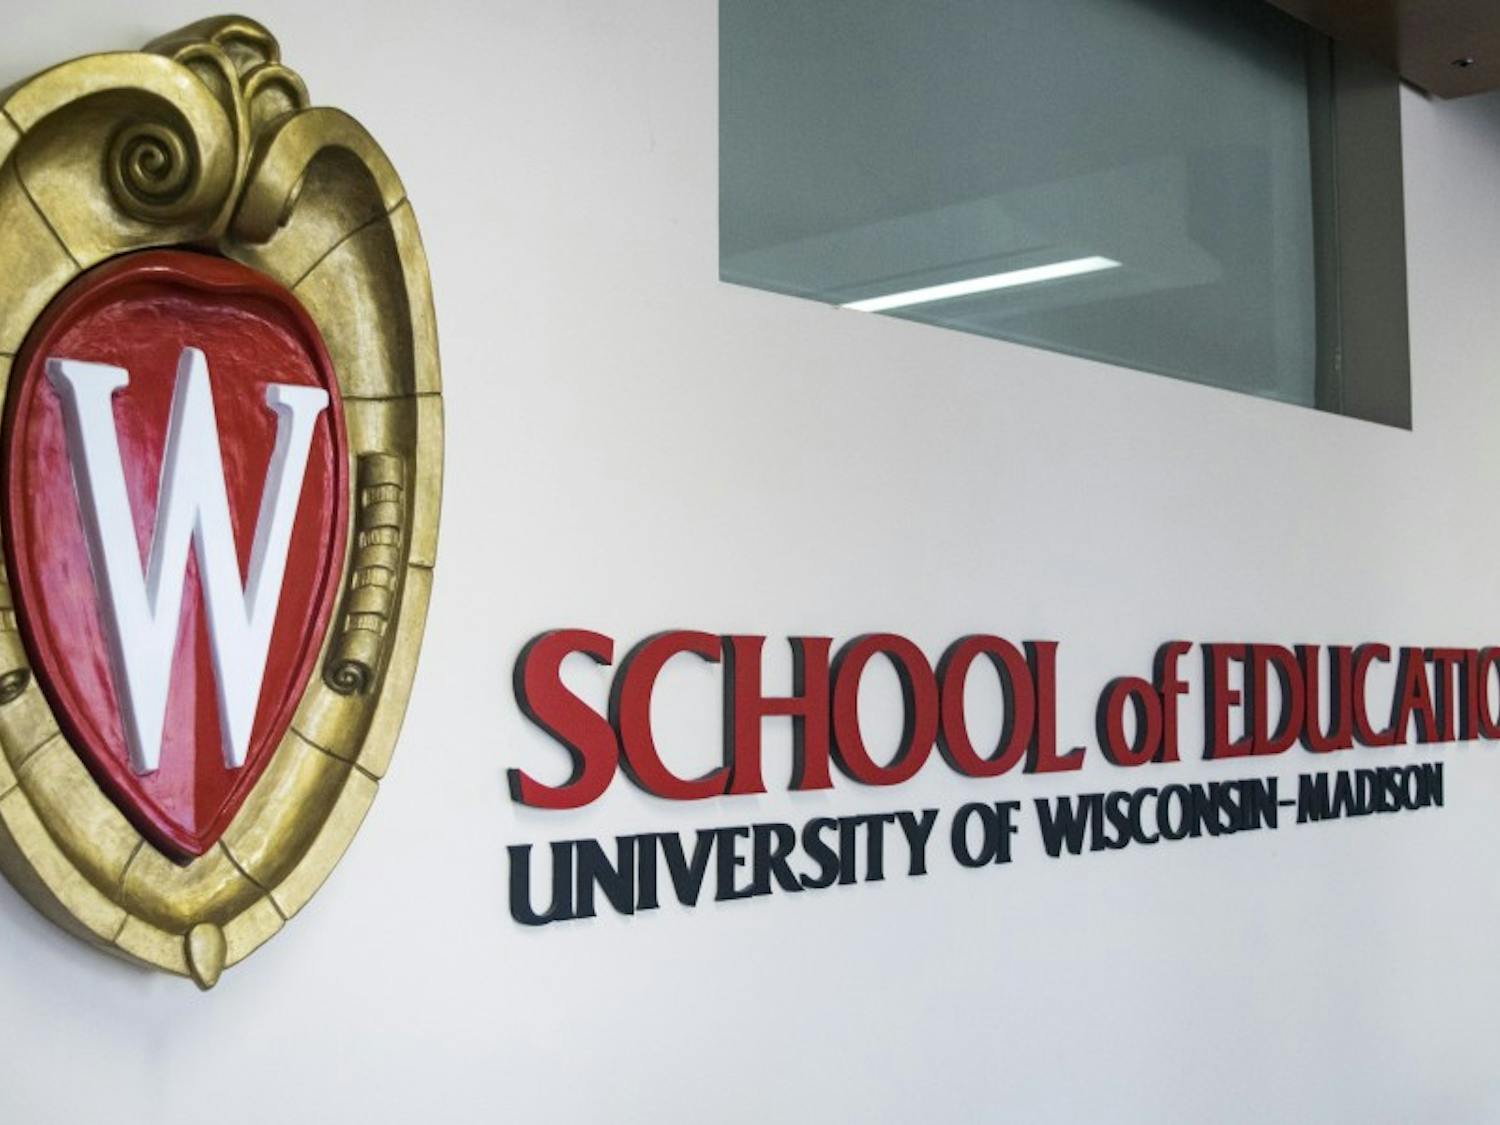 UW-Madison's School of Education ranked No. 2 &mdash;&nbsp;tied with Harvard &mdash; on U.S. News & World Report's rankings for best education graduate programs.